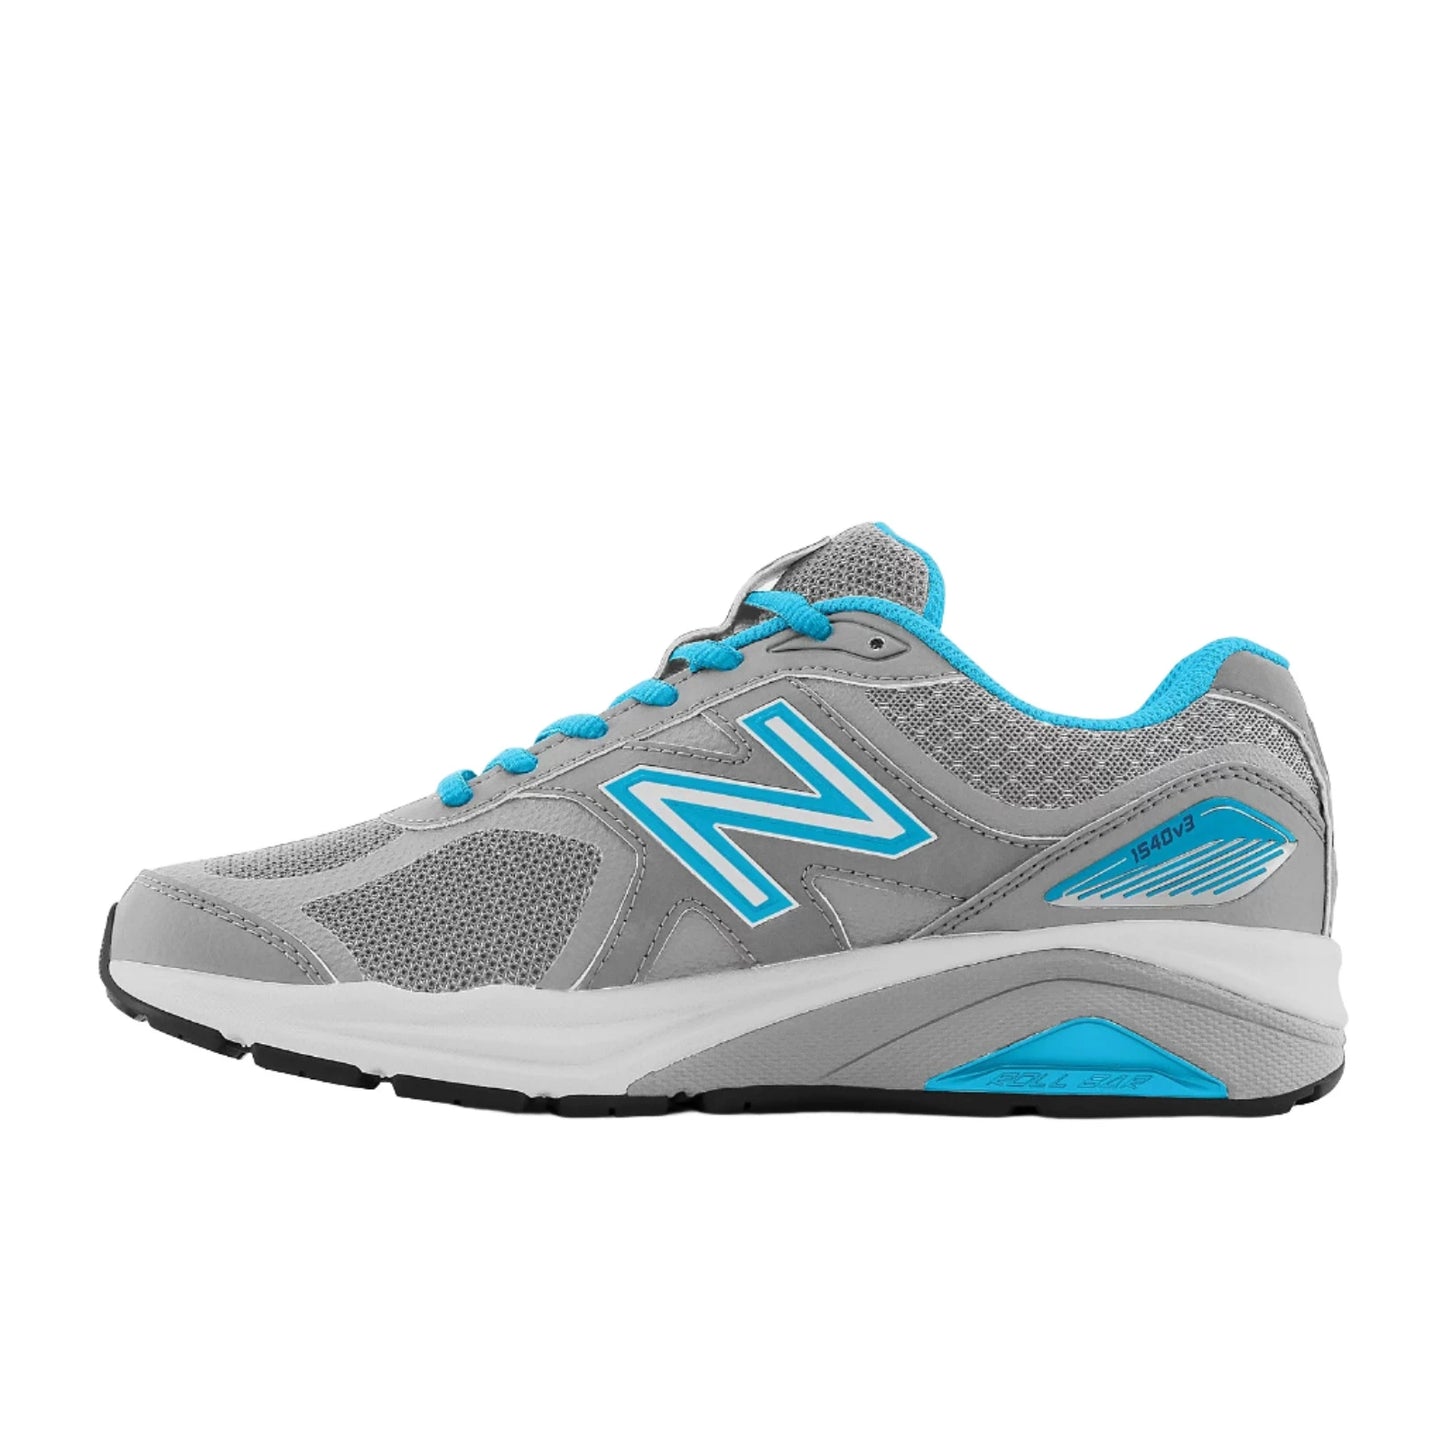 New Balance Women's W 1540 High Stability Running Shoe - Grey/Blue